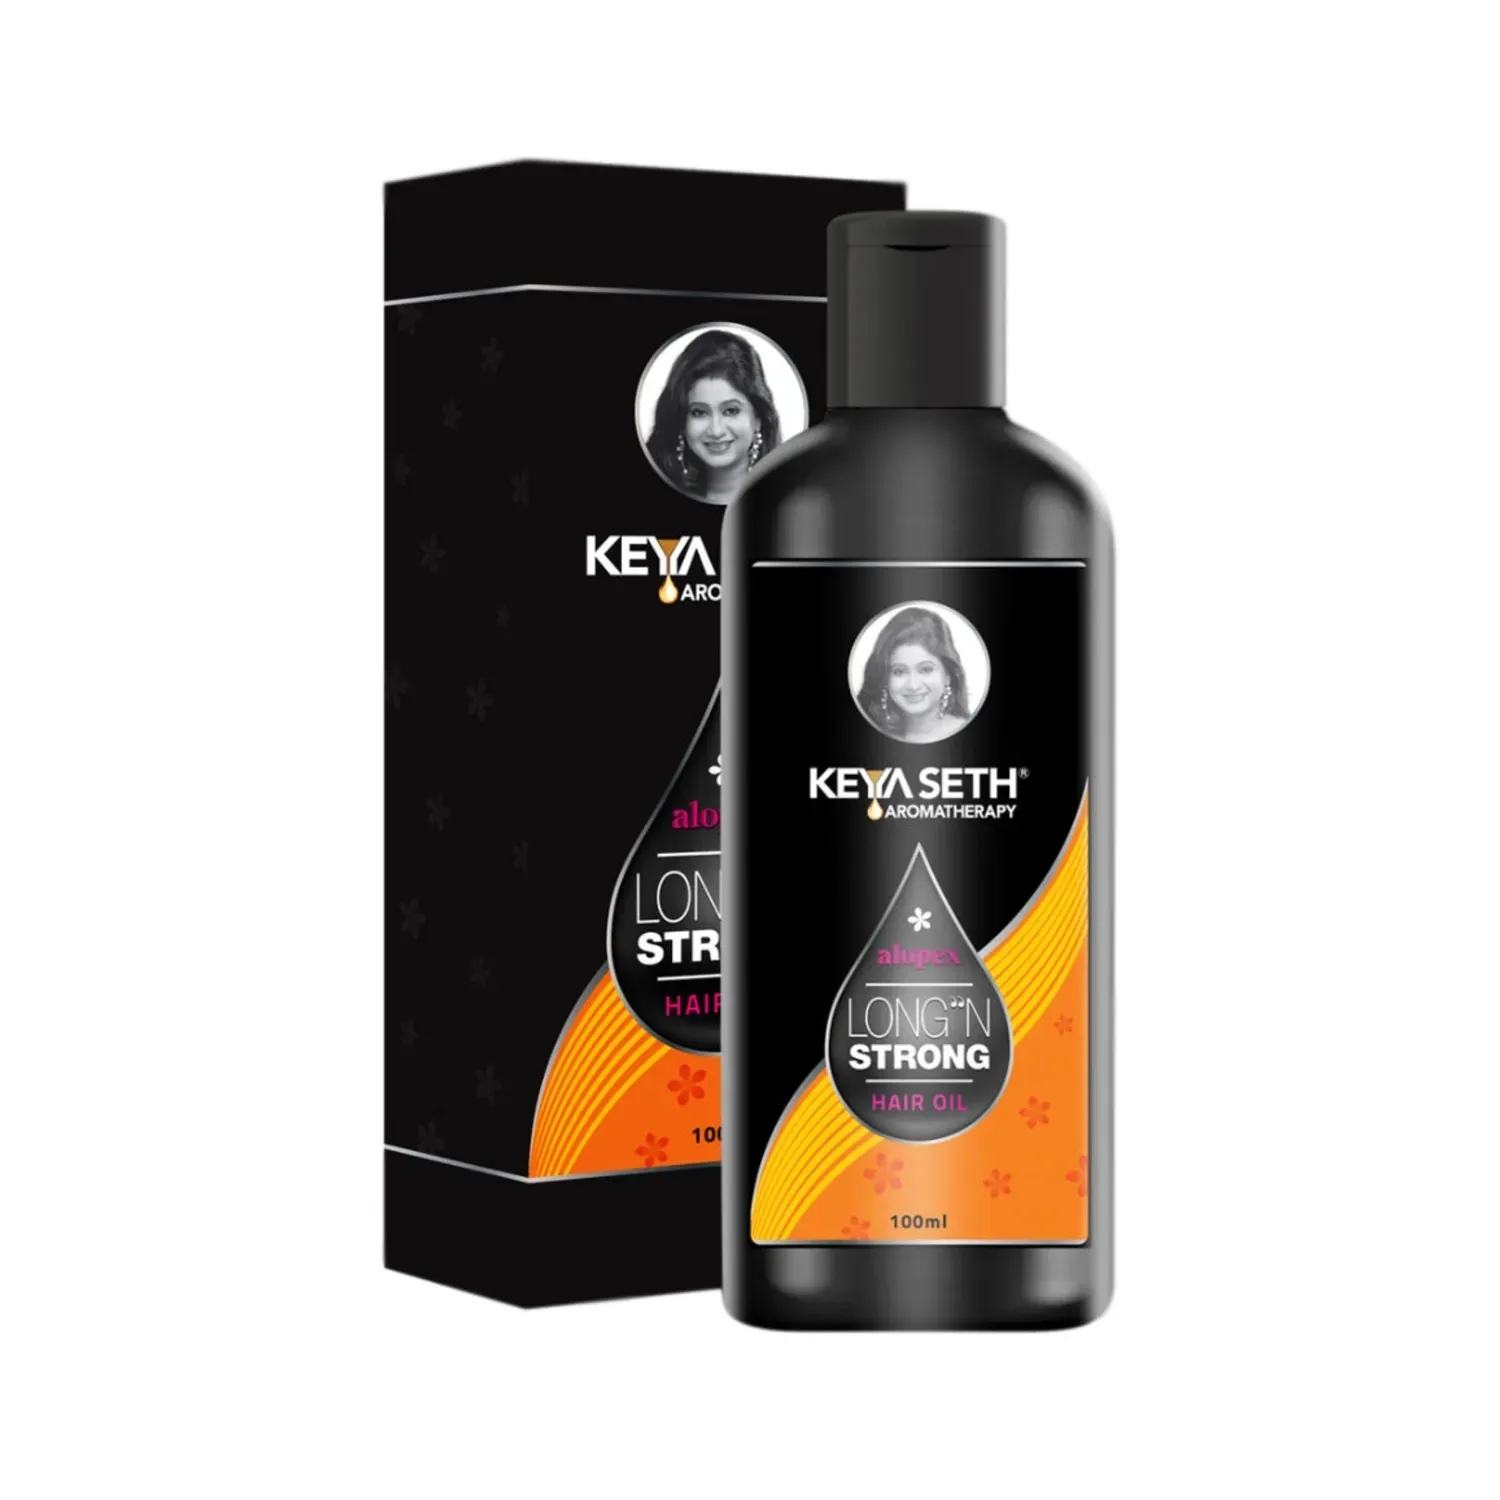 Keya Seth Aromatherapy | Keya Seth Aromatherapy Alopex Long N Strong Hair Oil (100ml)